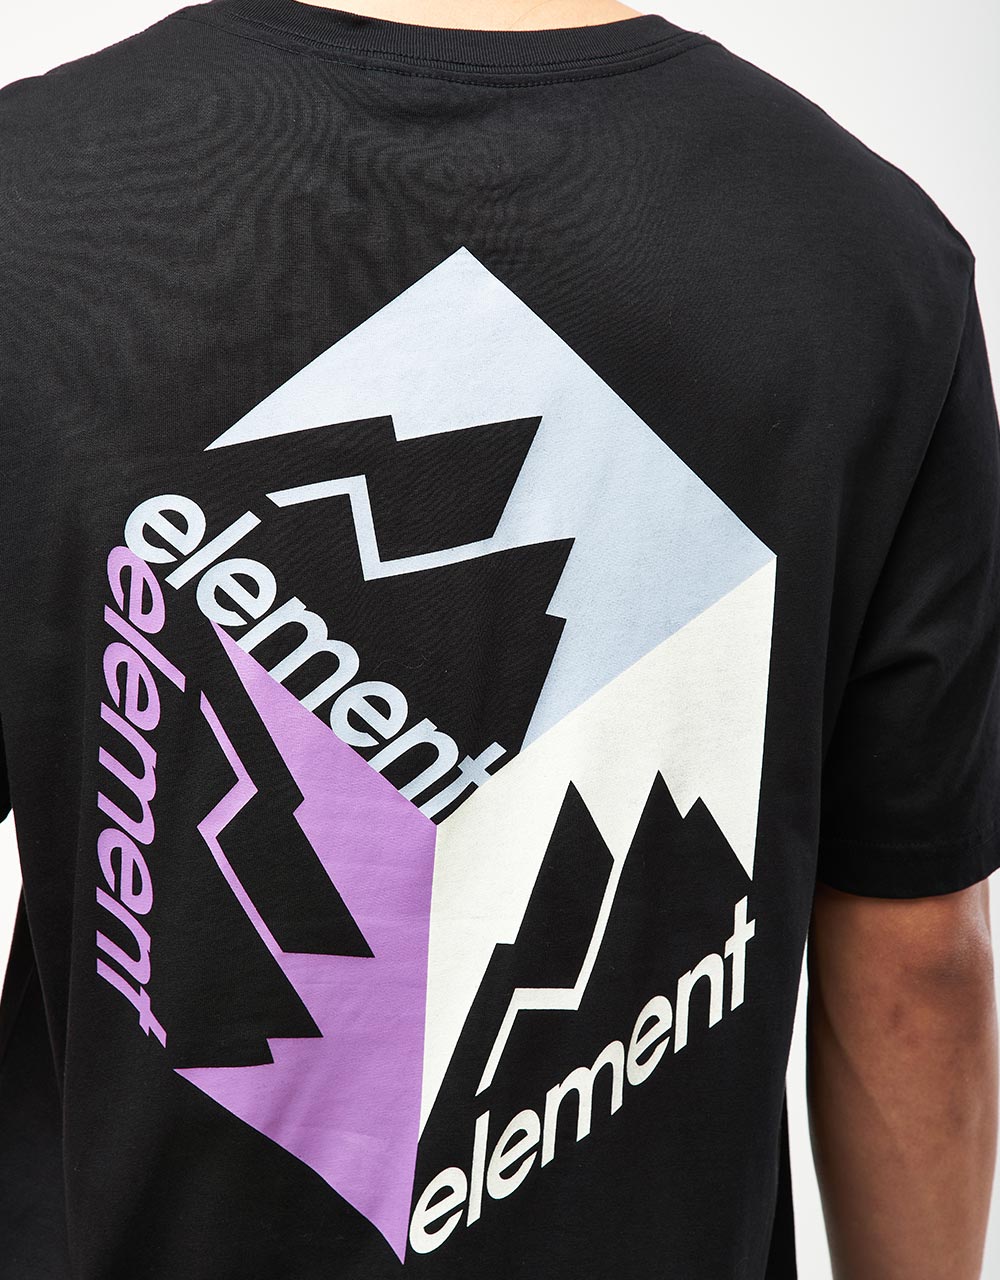 Element Joint Cube T-Shirt - Flint Black